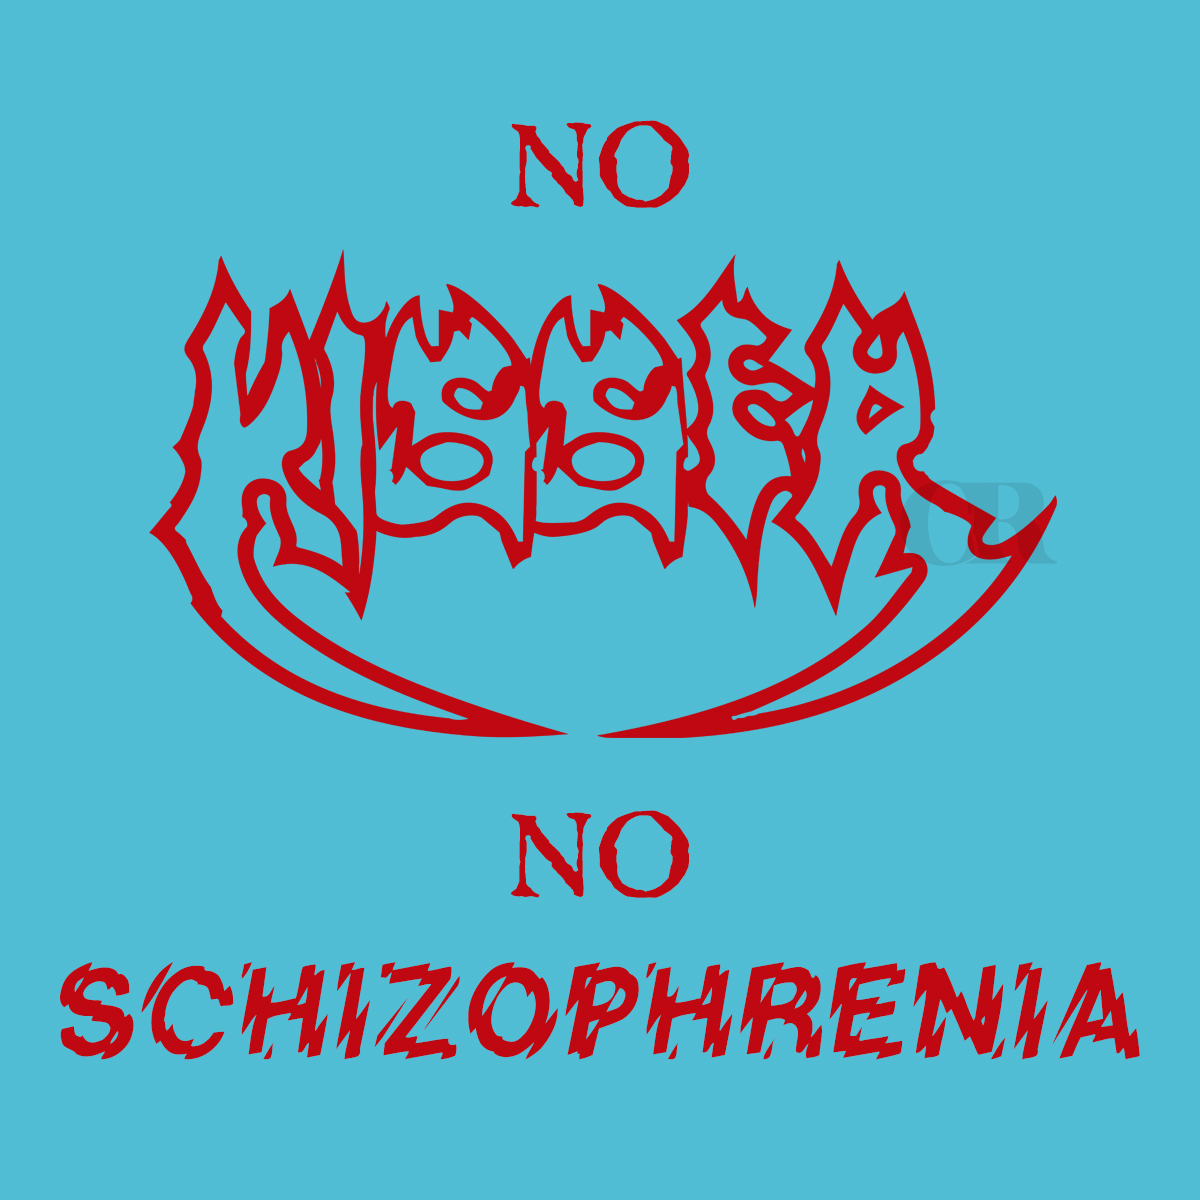 #andreaskisser #sepultura #schizophrenia #coverband @andreaskisser @sepulturacombr @Sepcommunity